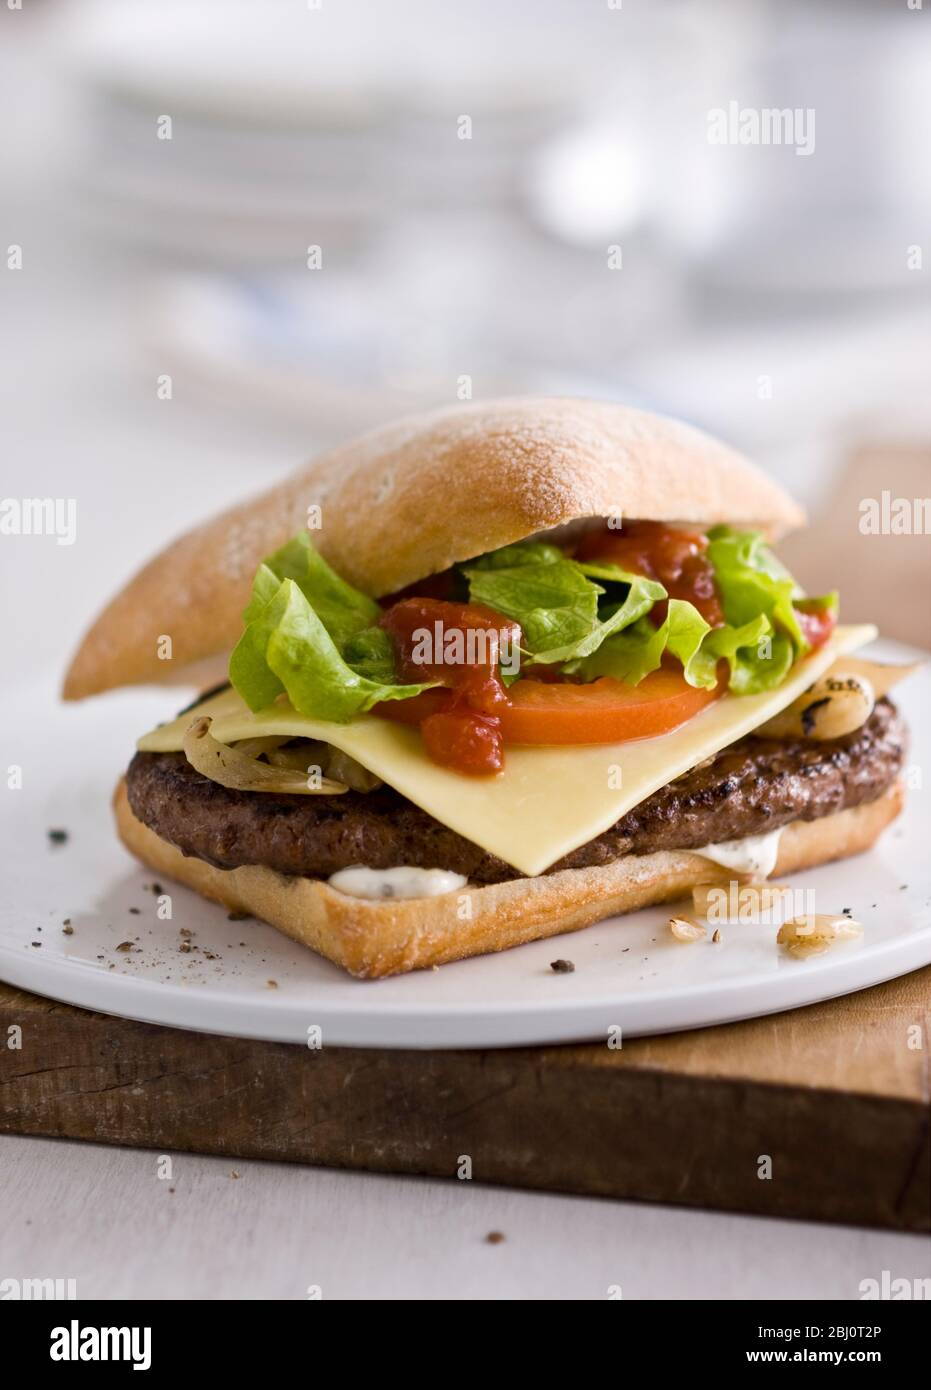 Cheeseburger de calabaza con ensalada y tomate en pan de ciabatta sobre plato de porcelana blanca plana. - Foto de stock